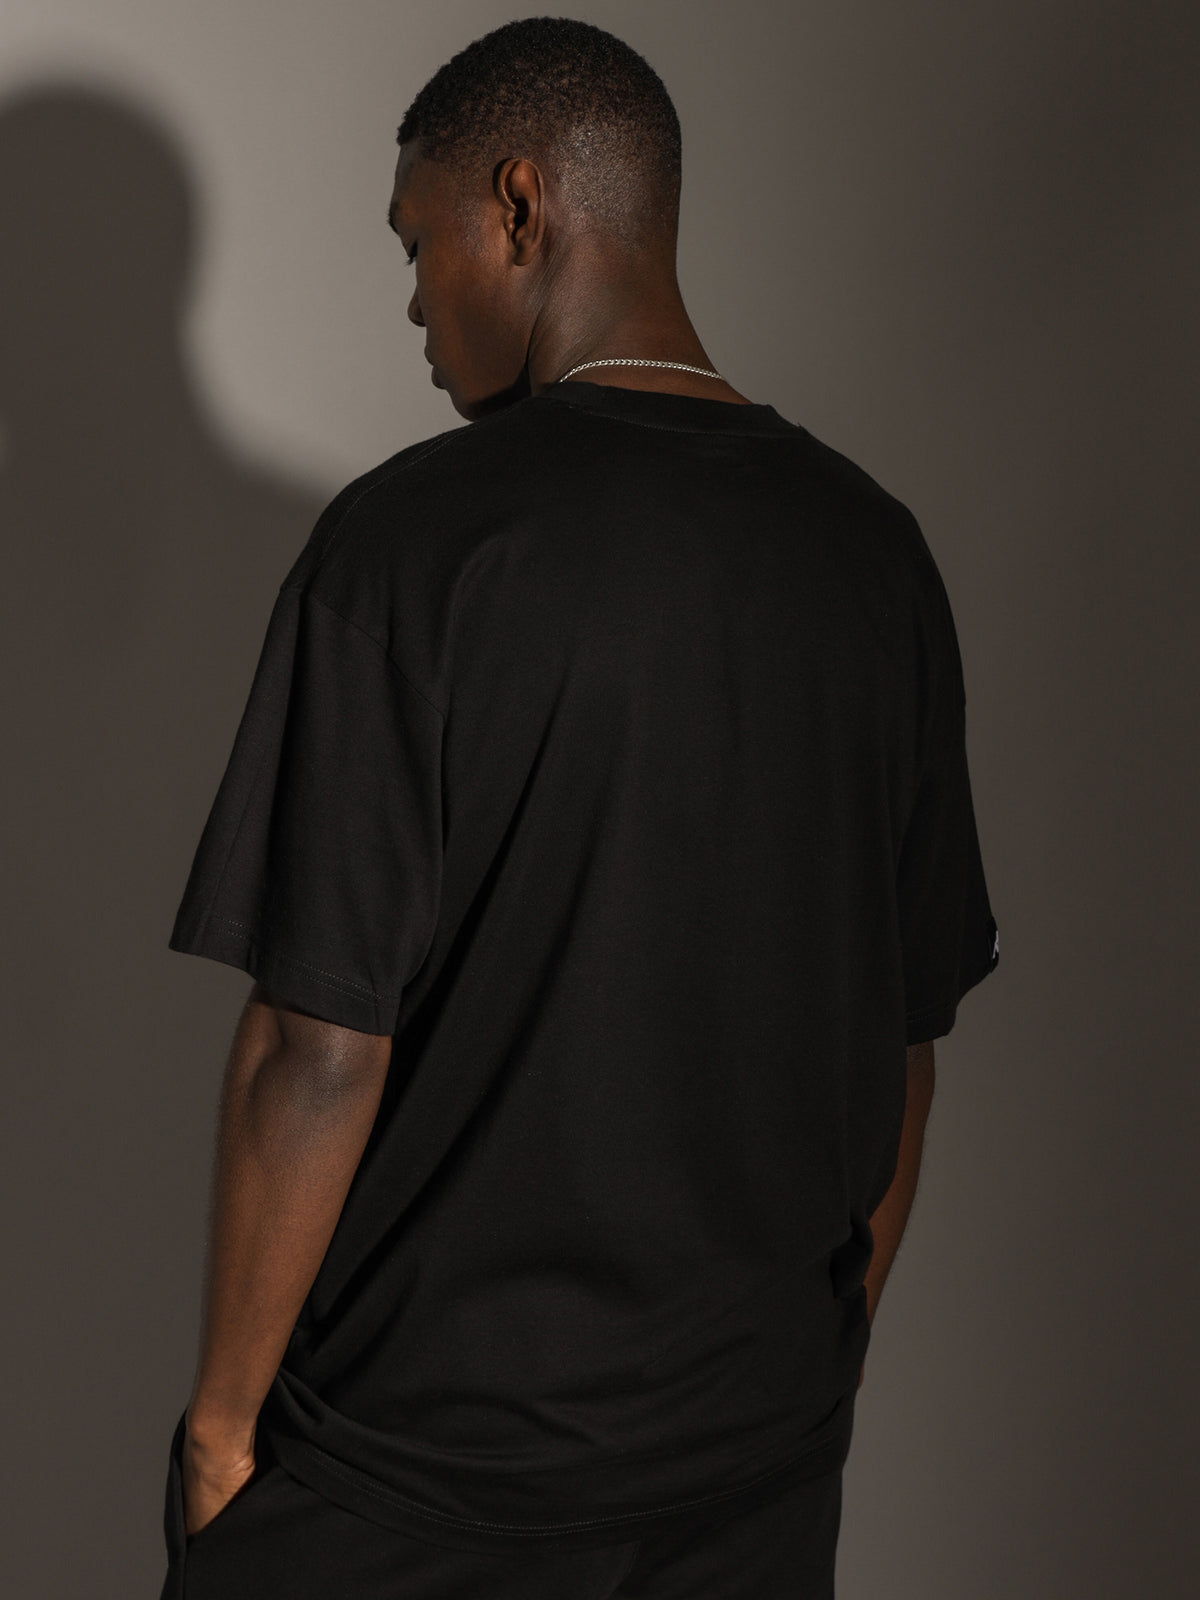 Authentic Senoc T-Shirt in Black